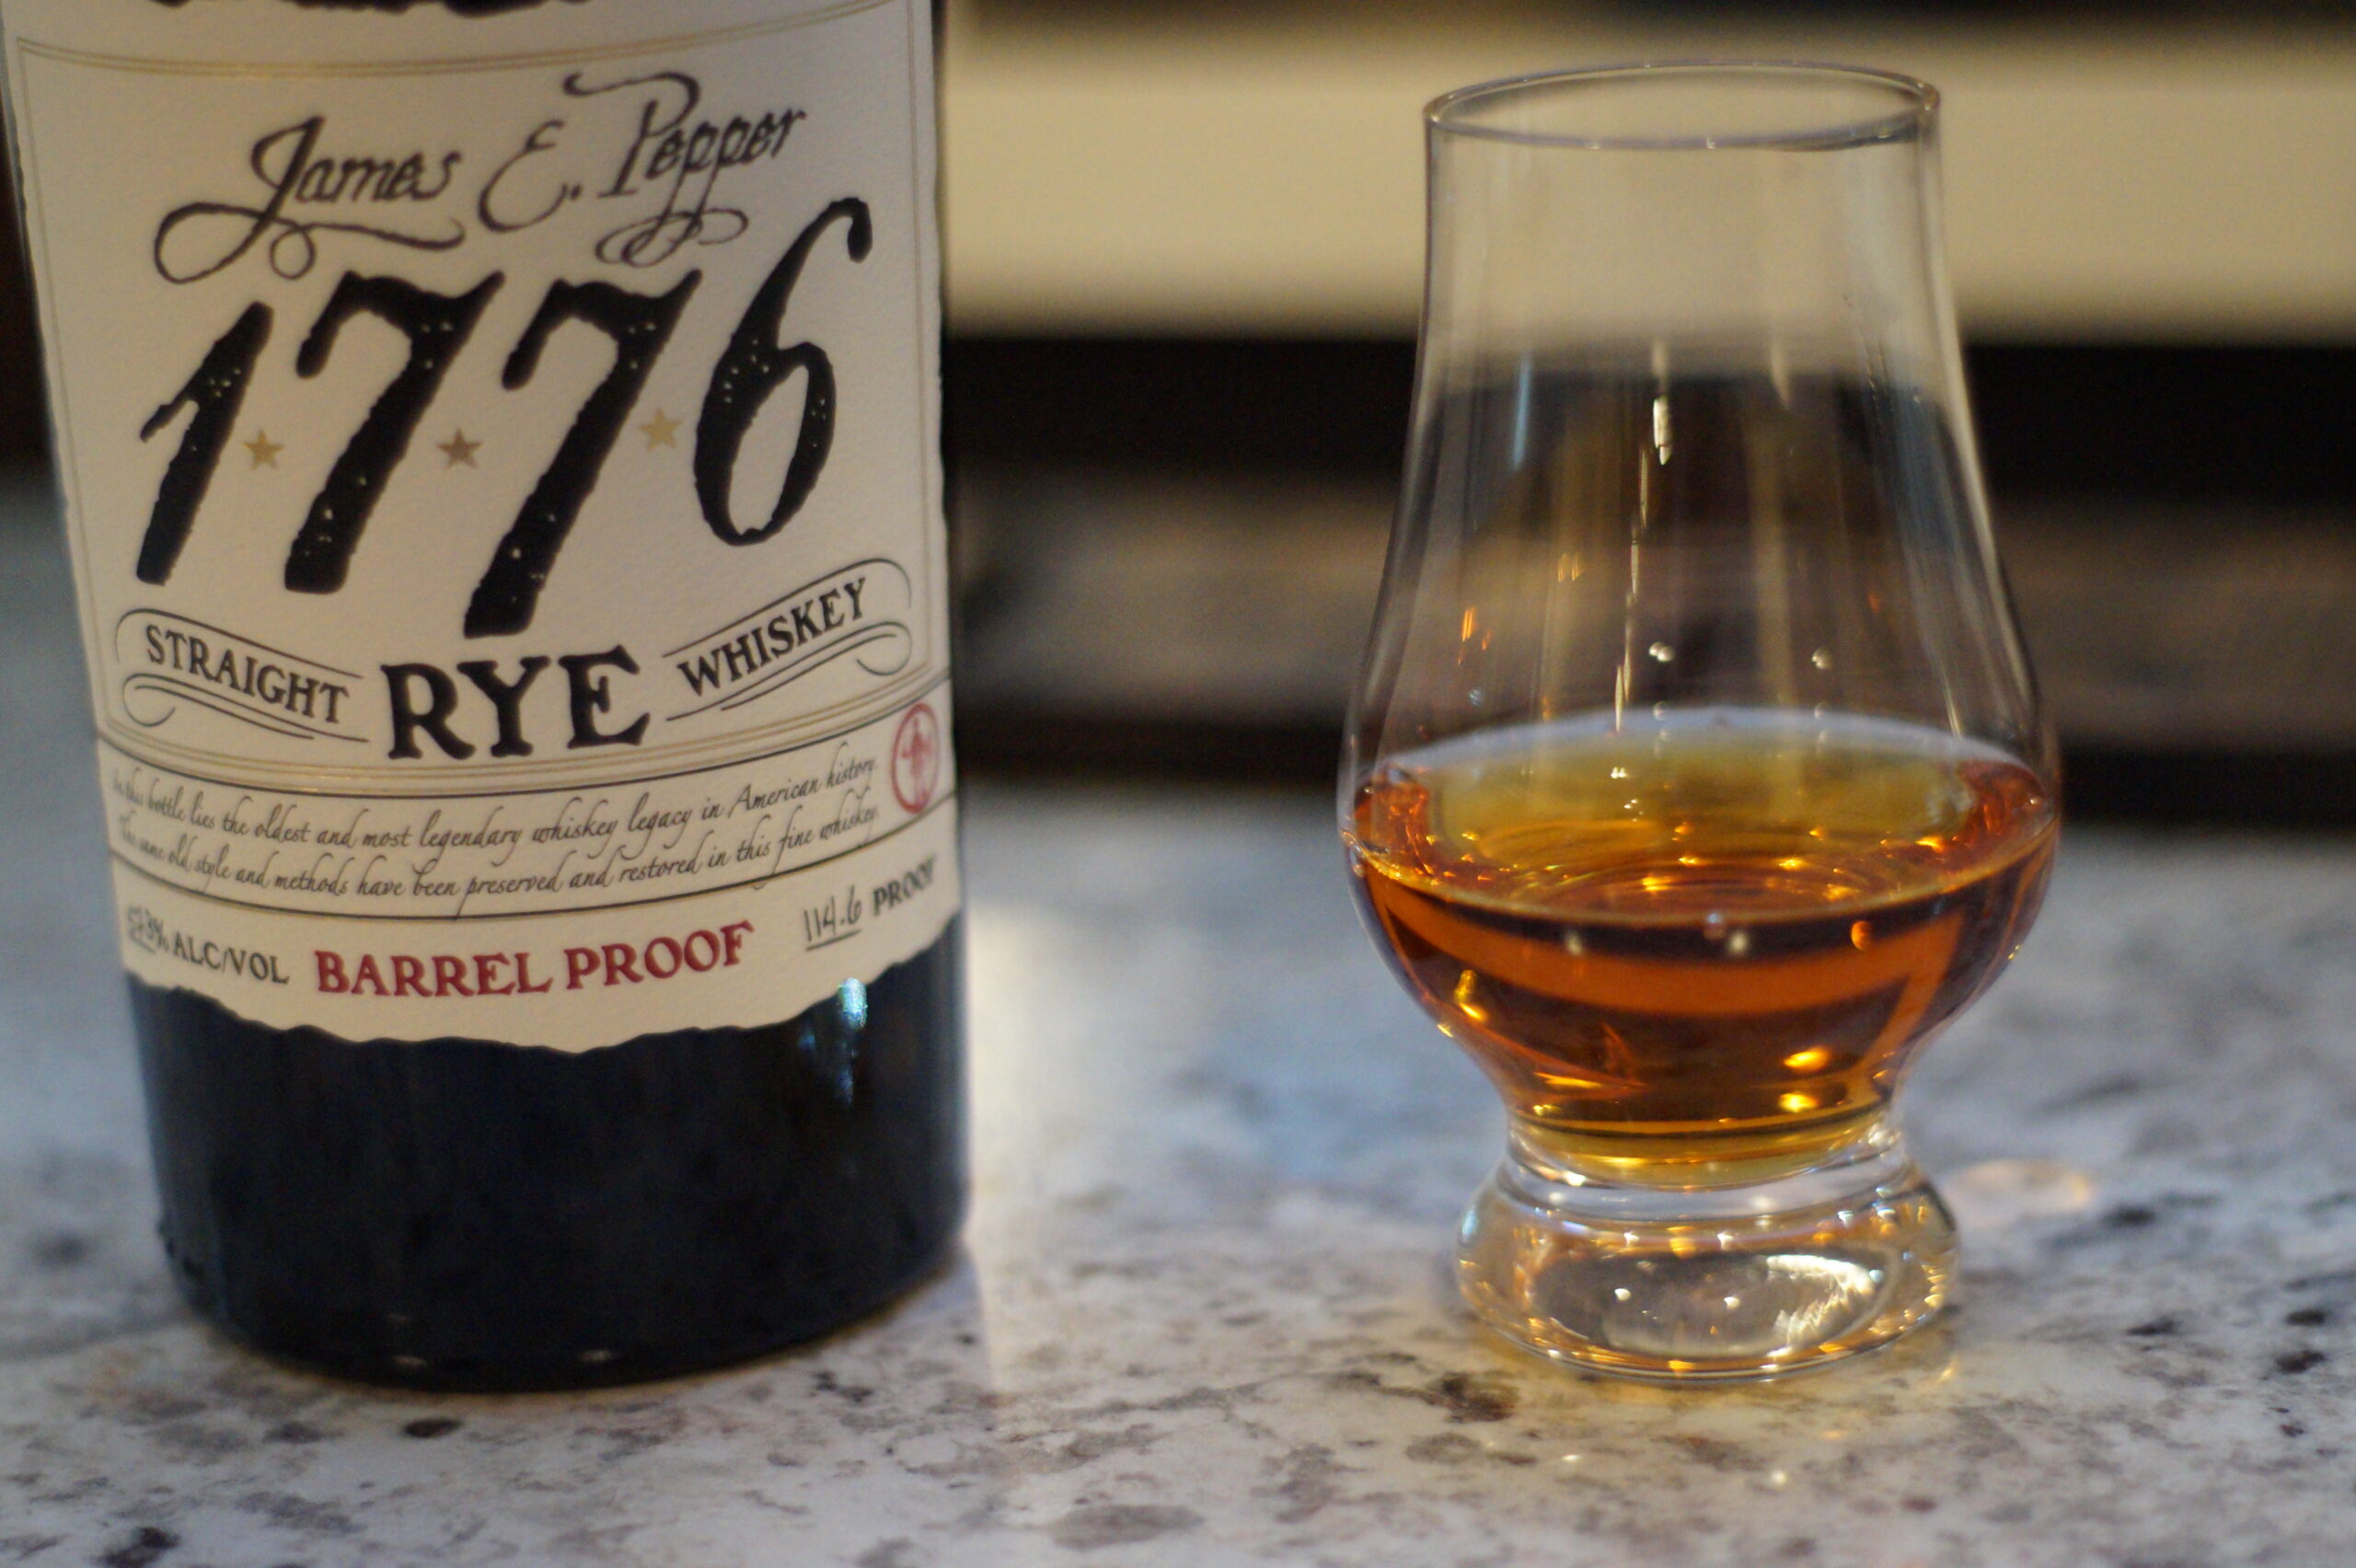 James E. Pepper 1776 Barrel Proof Rye Whiskey Review – ModernThirst | Whisky